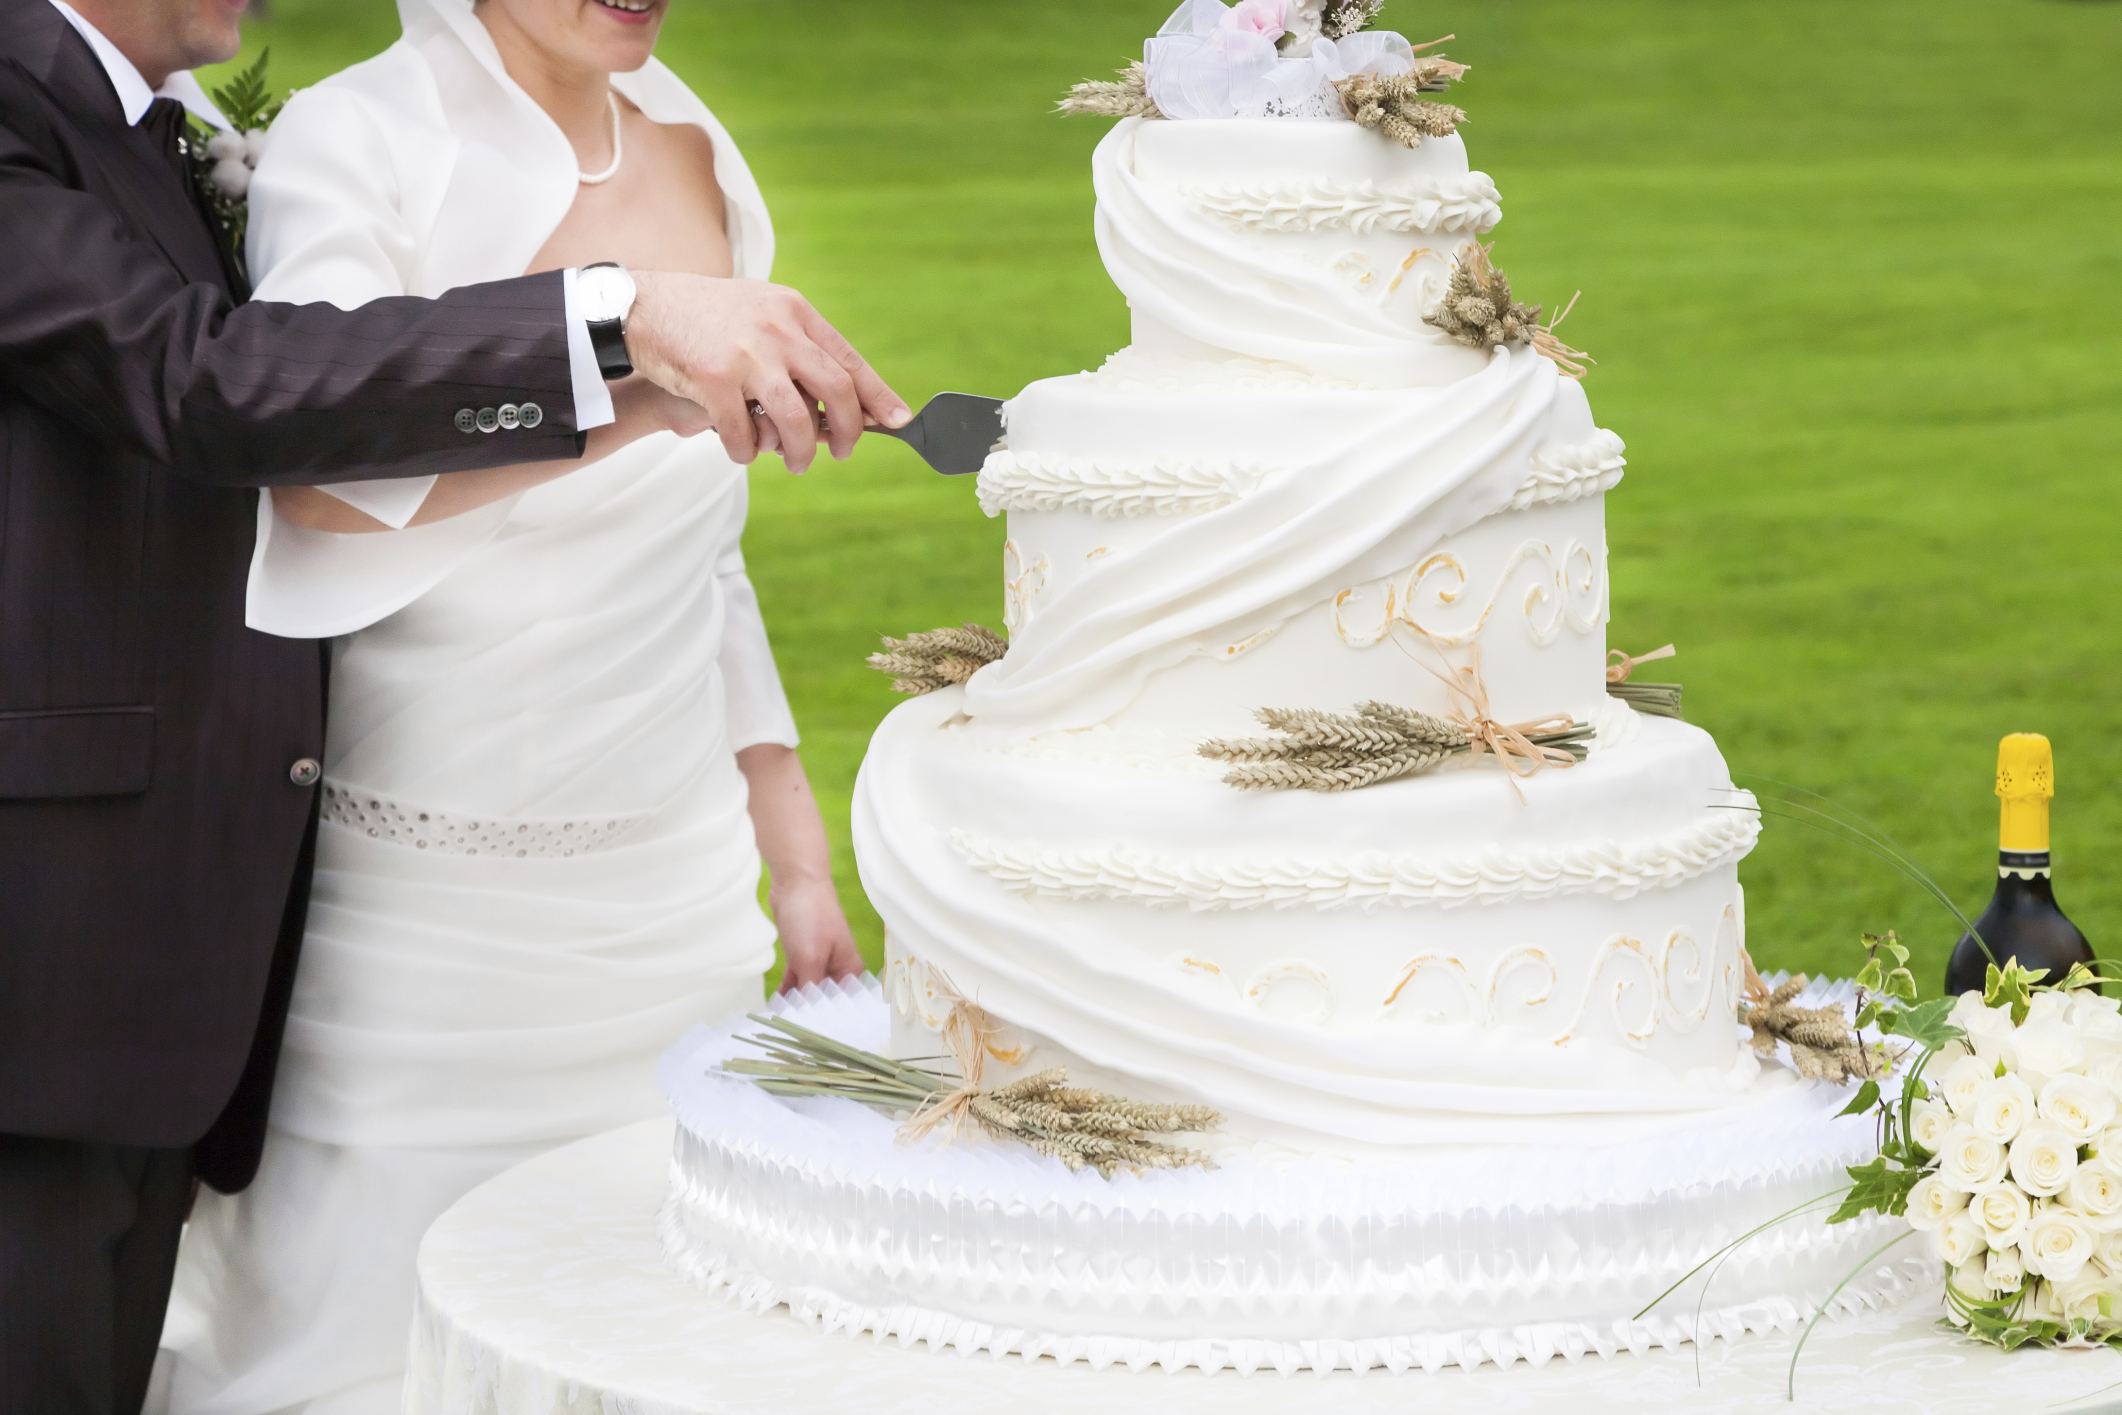 LDS Wedding Cake Cutting Songs – LDS Wedding Receptions